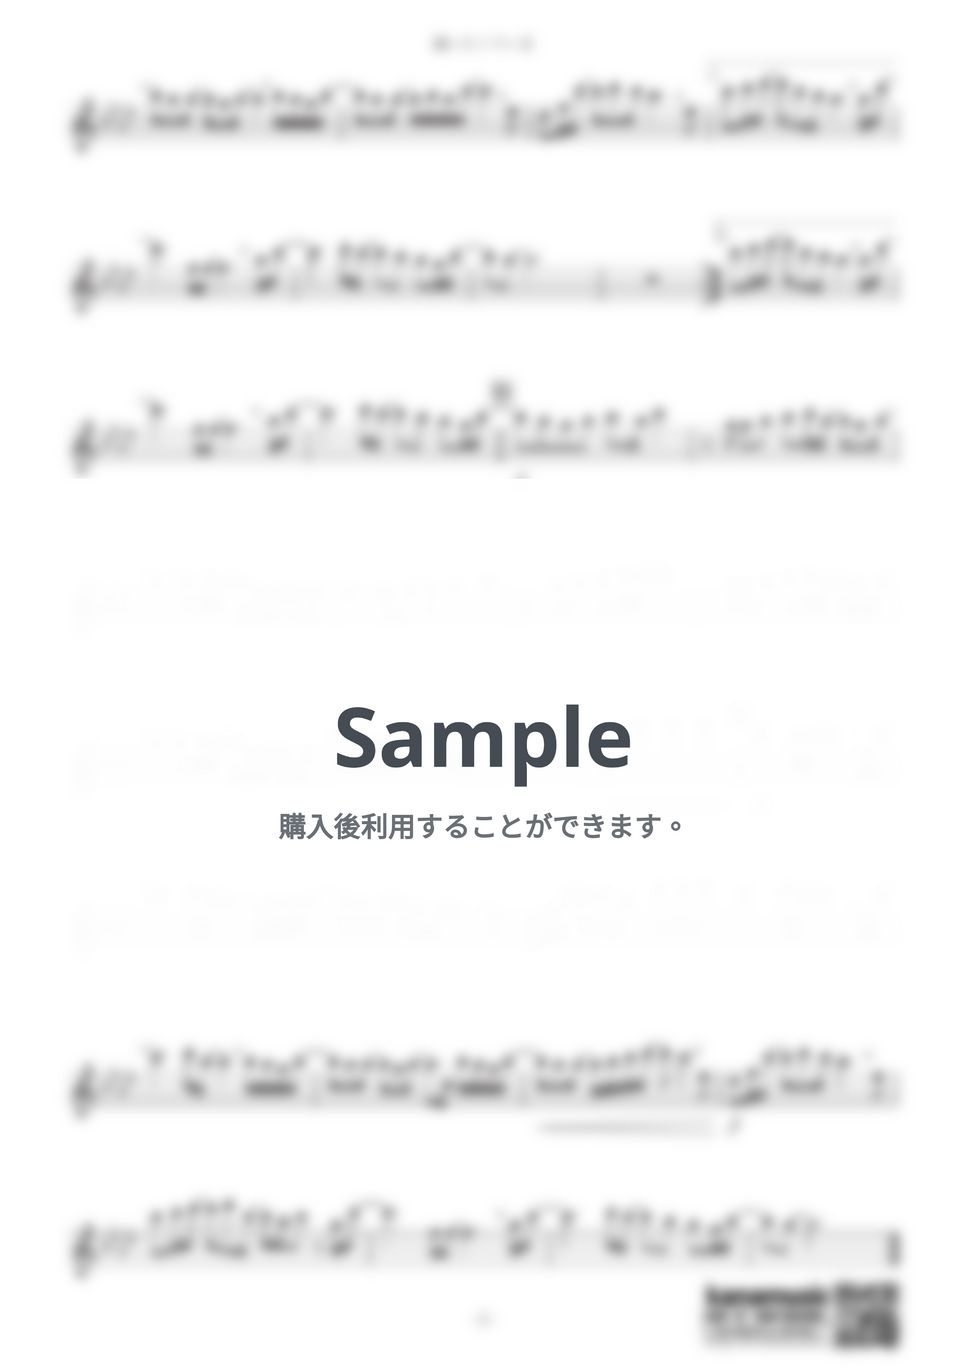 MISIA - 逢いたくていま (B♭) by kanamusic